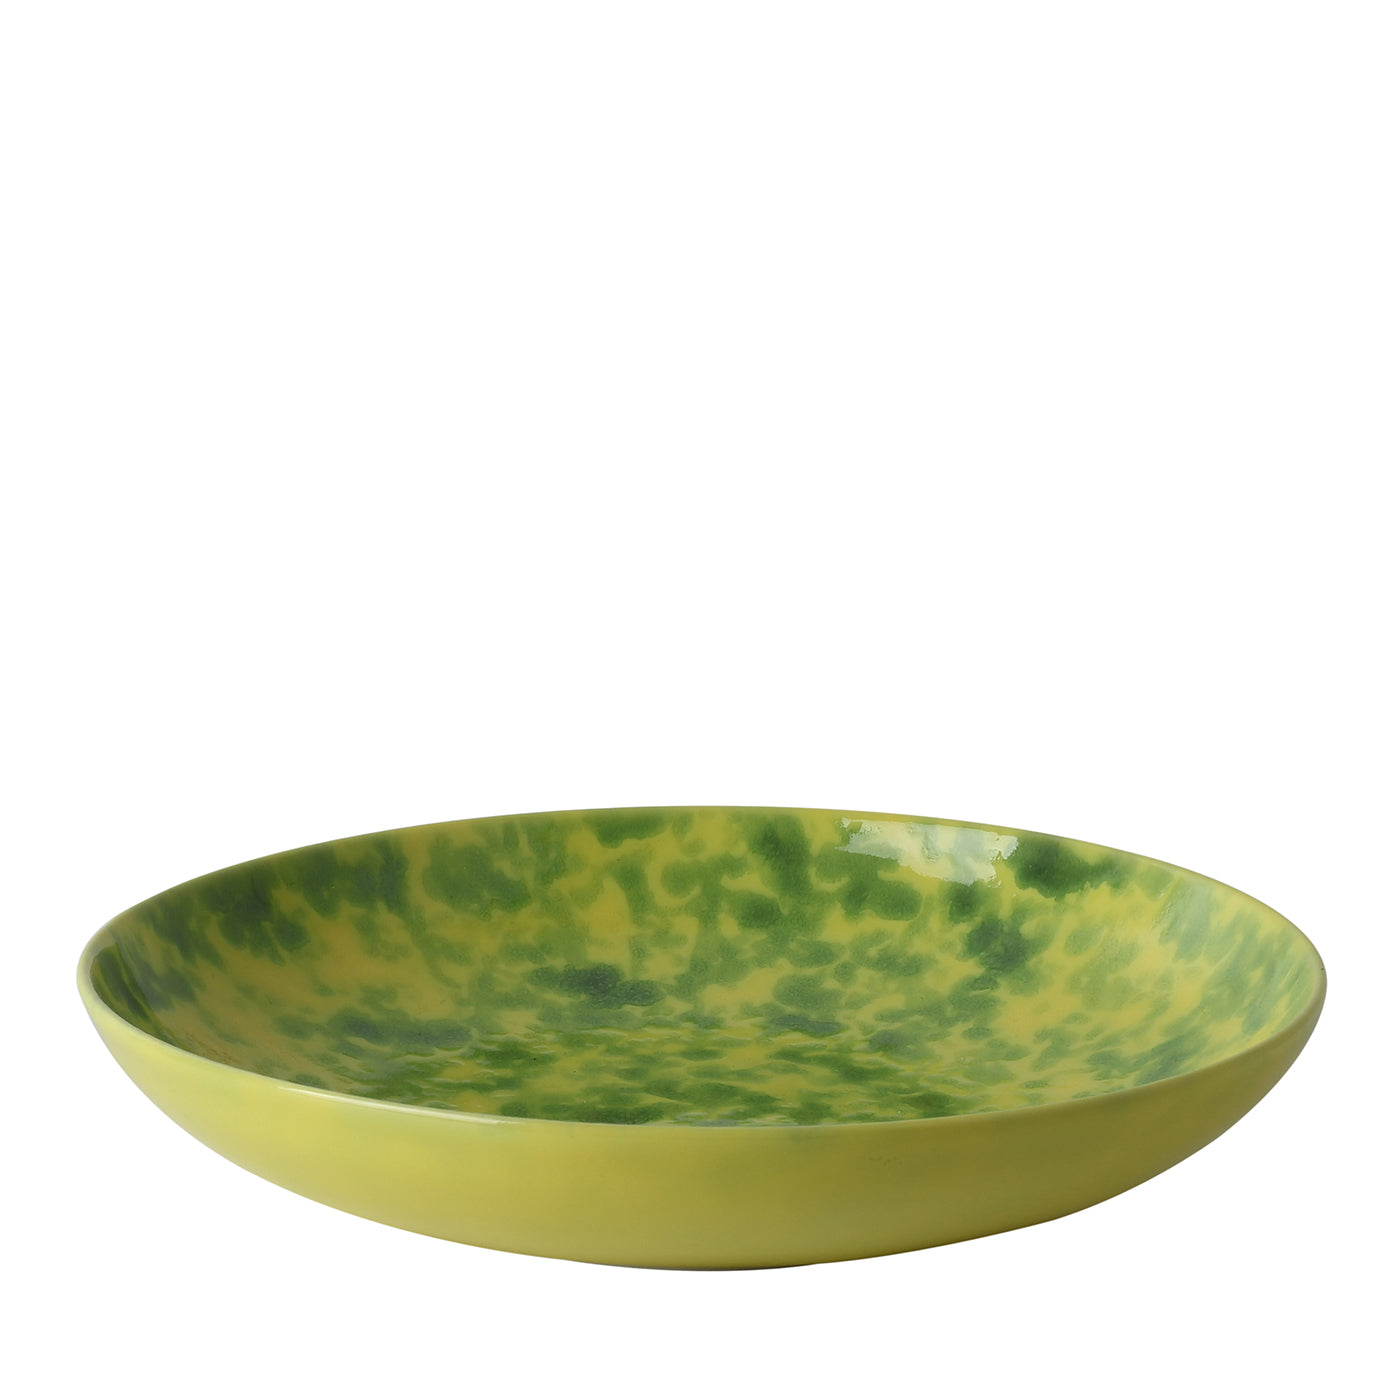 Limoni Round Green-Mottled Yellow Fruit Plate - Alternative view 1